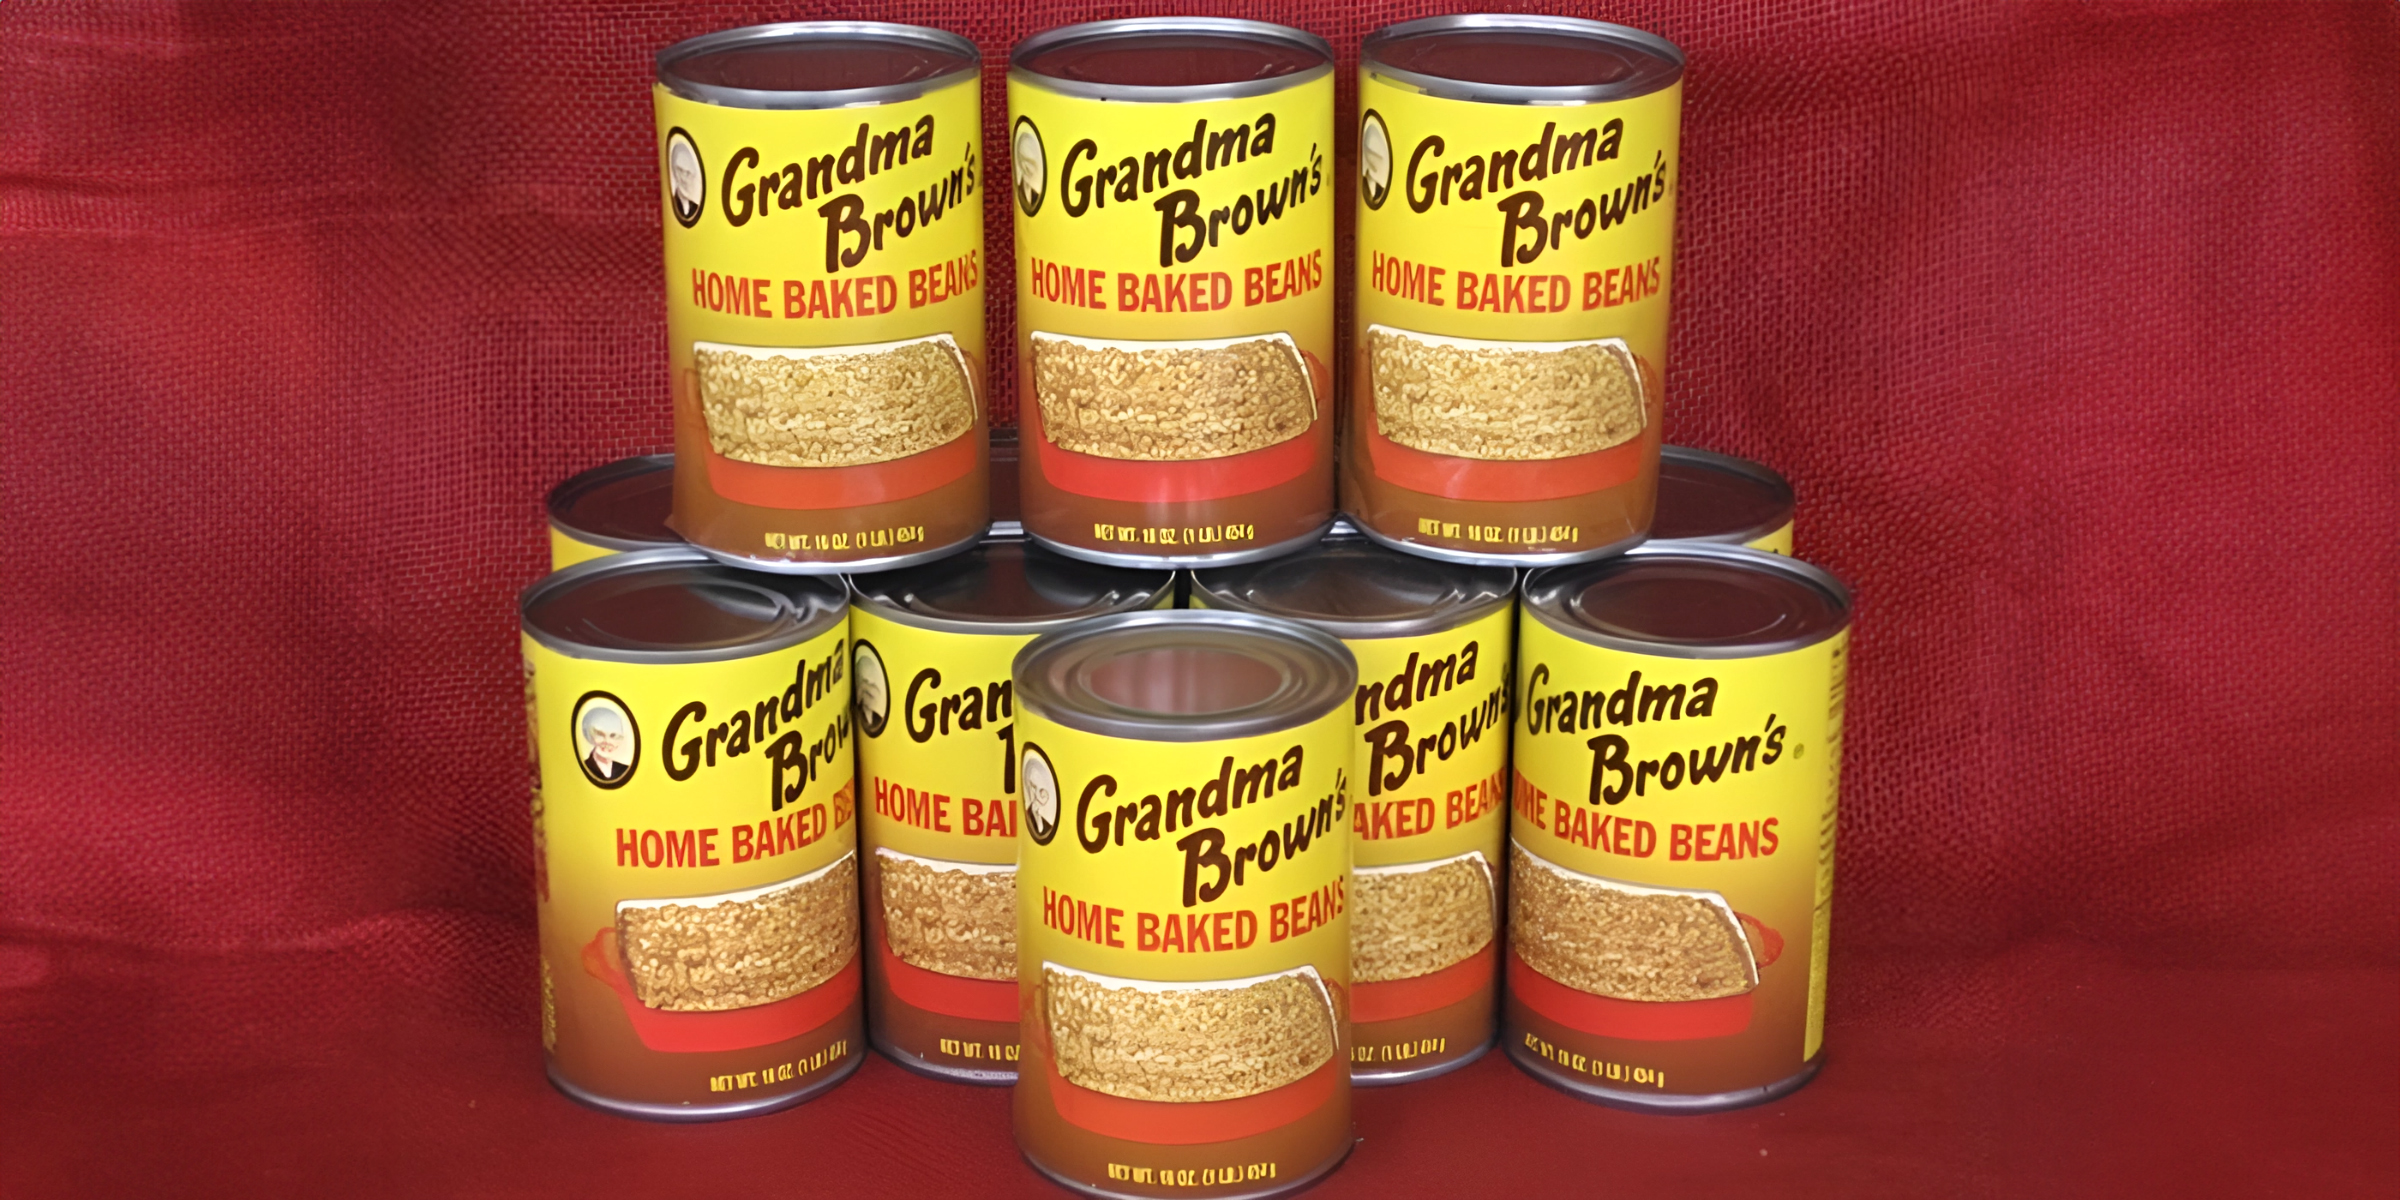 Grandma Brown's Baked Beans | Source: Facebook/atasteofupstatenewyork